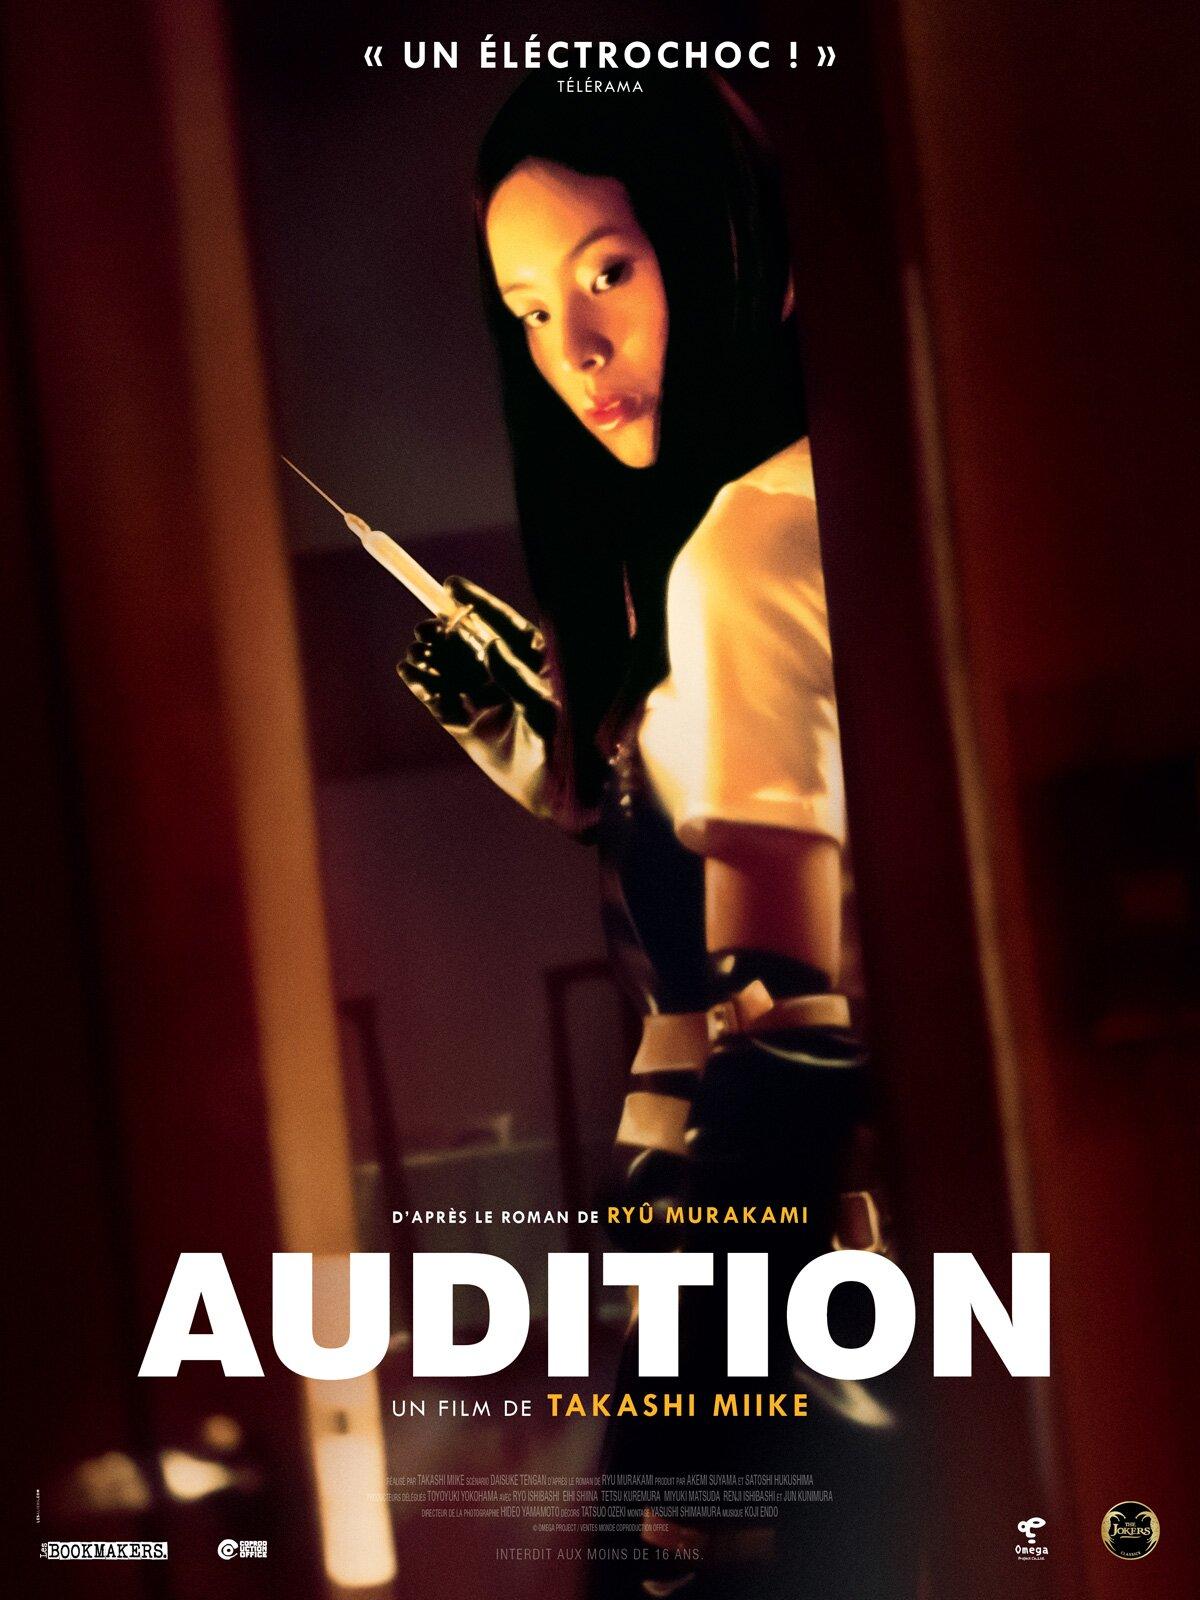 Audition(1999) - Source: imdb.com